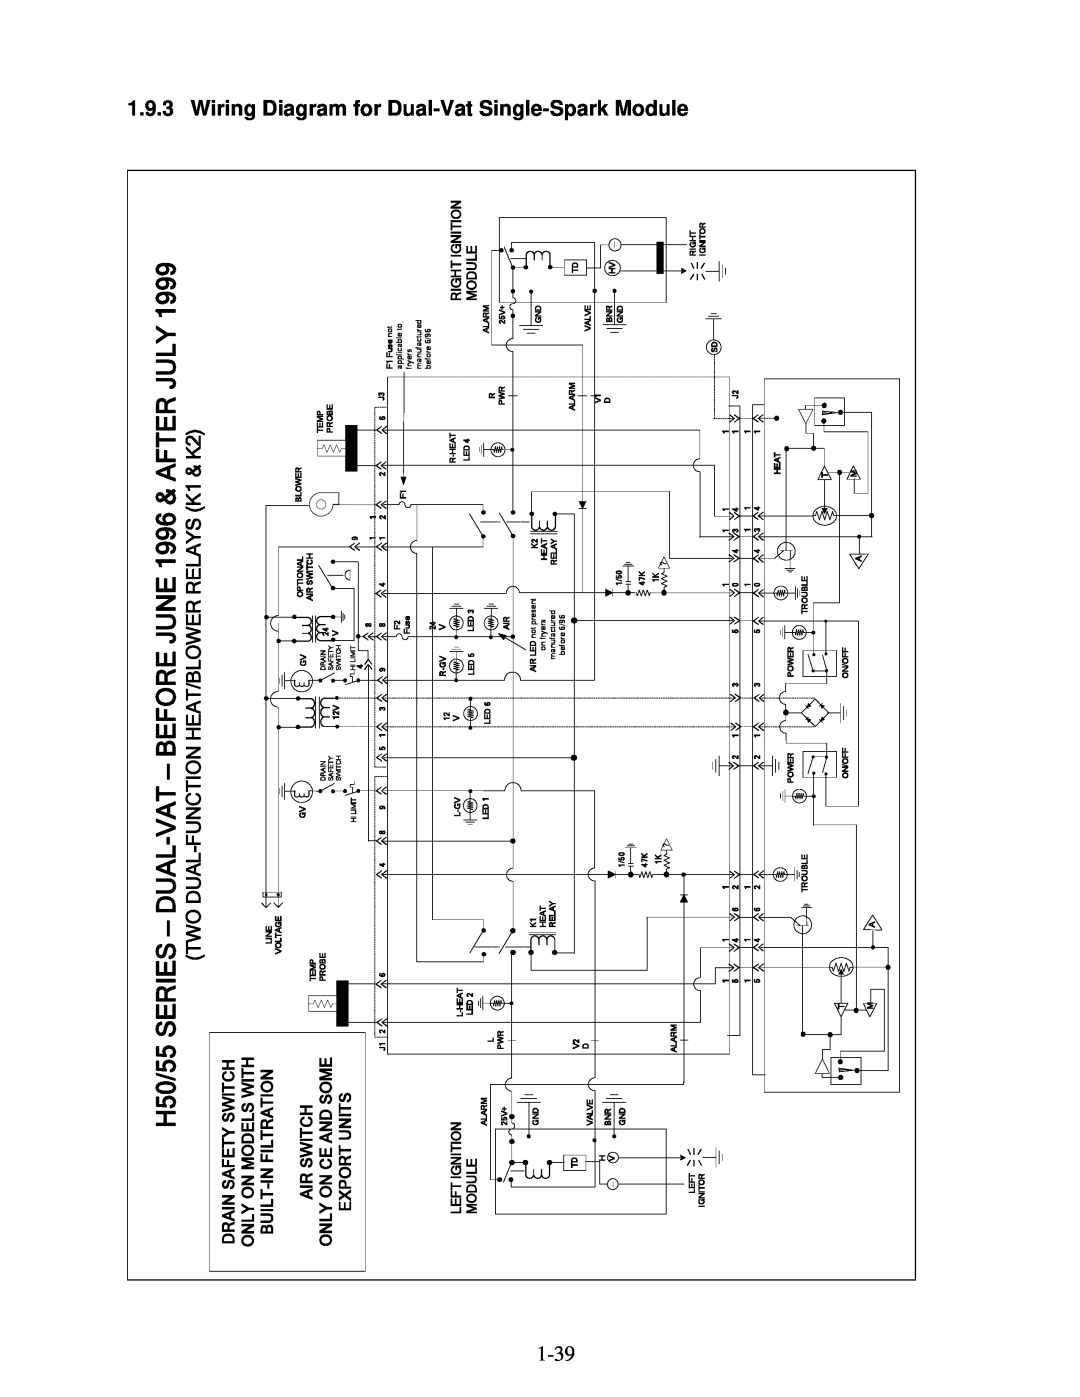 Frymaster H50 manual 1.9.3, Single-Spark, Wiring, Diagram, Dual, Module, TWO DUAL-FUNCTIONHEAT/BLOWER RELAYS K1 & K2 